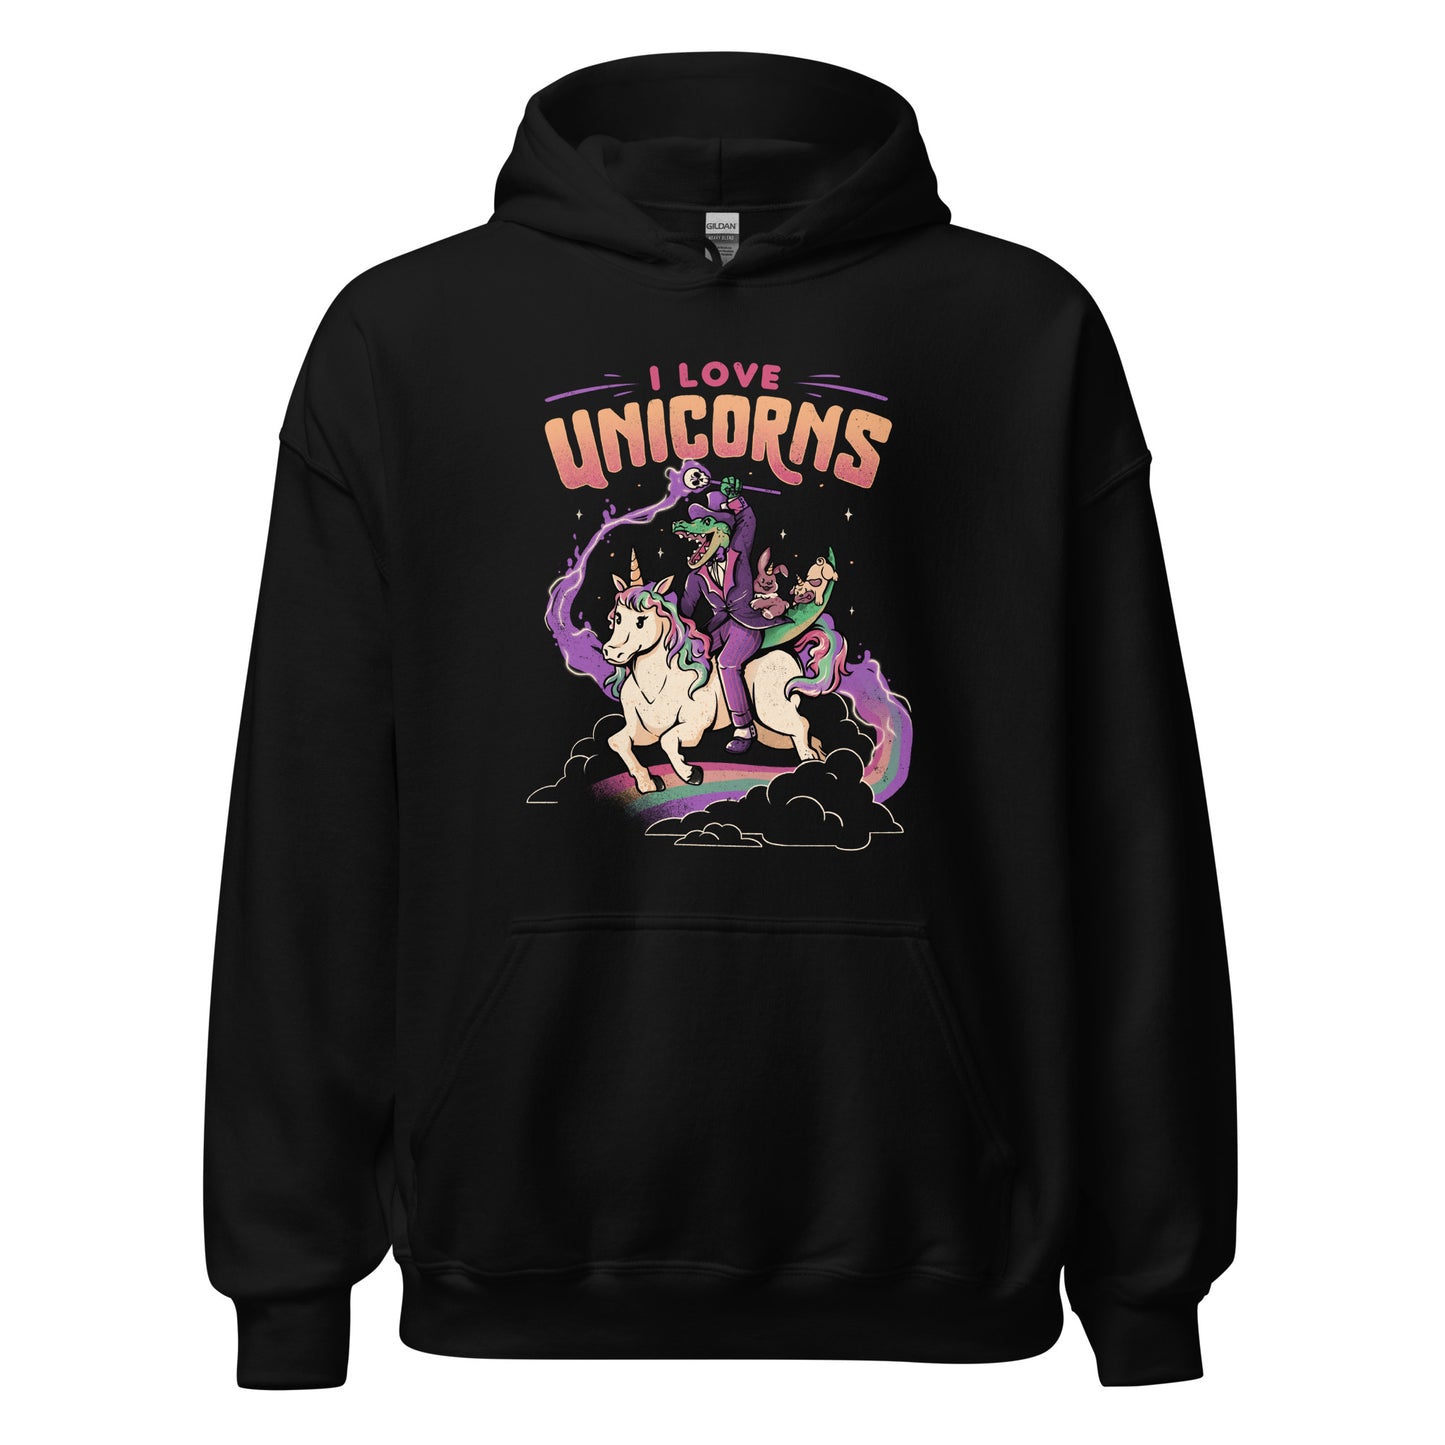 I Love Unicorns - Hoodie